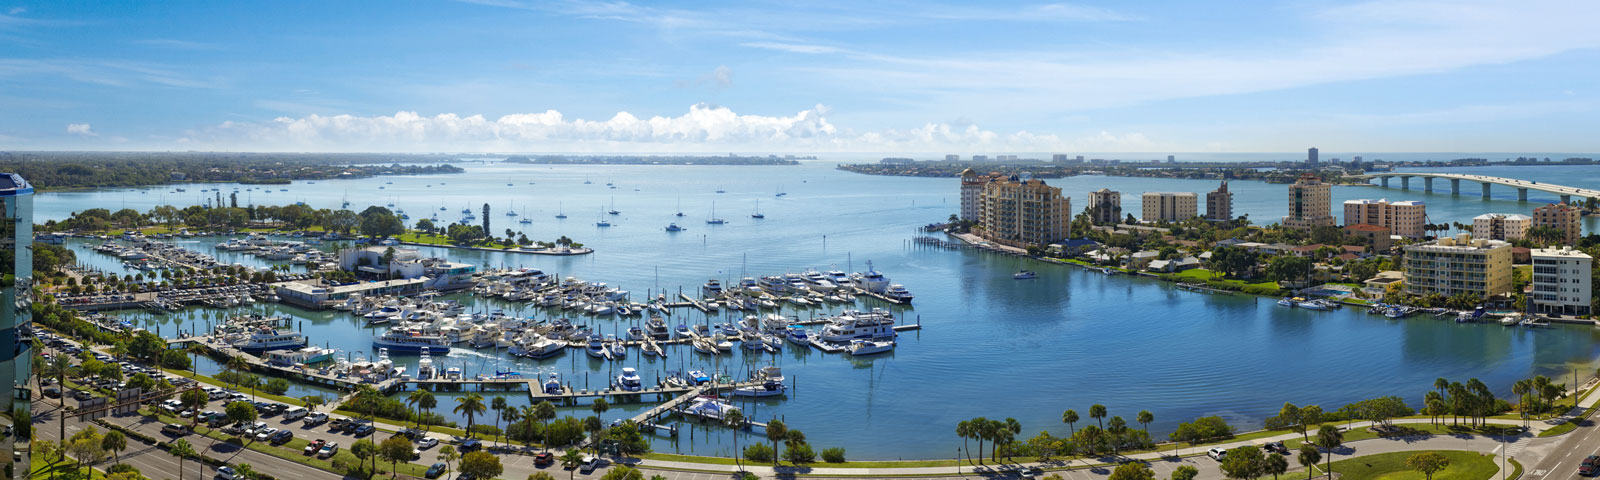 Sarasota Florida Real Estate - Condominiums